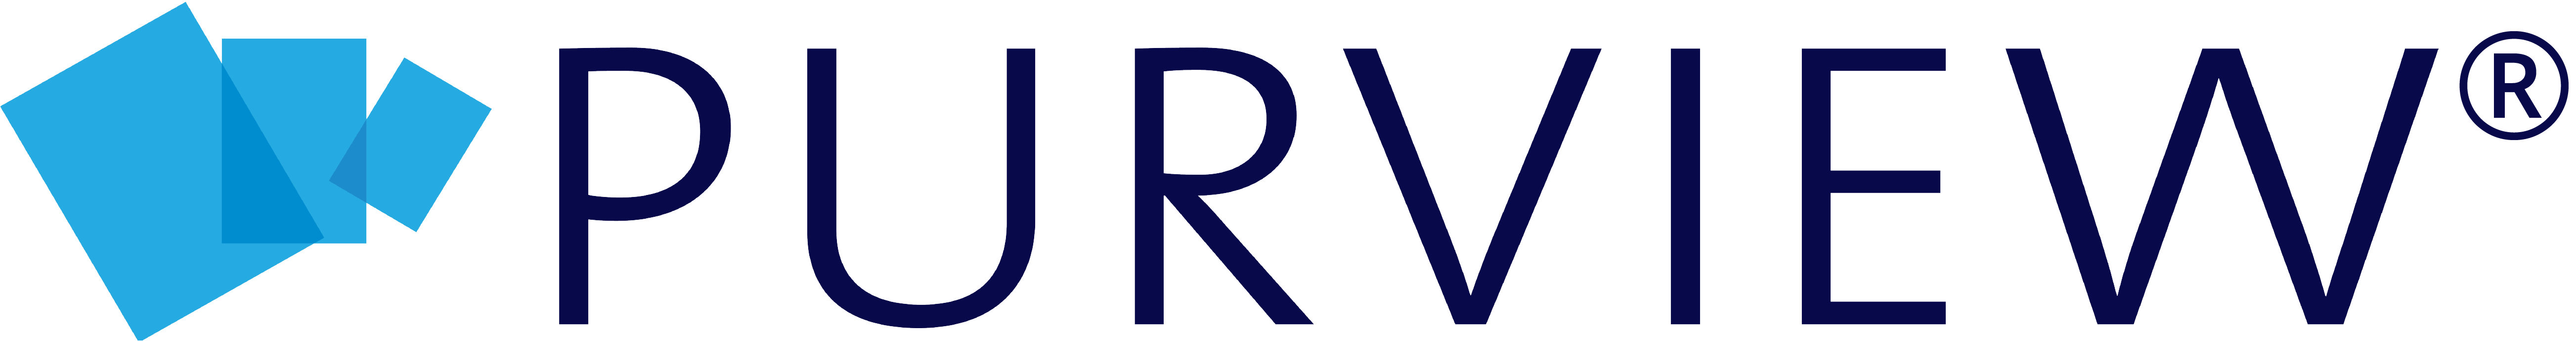 Purview Horizontal Logo_2021